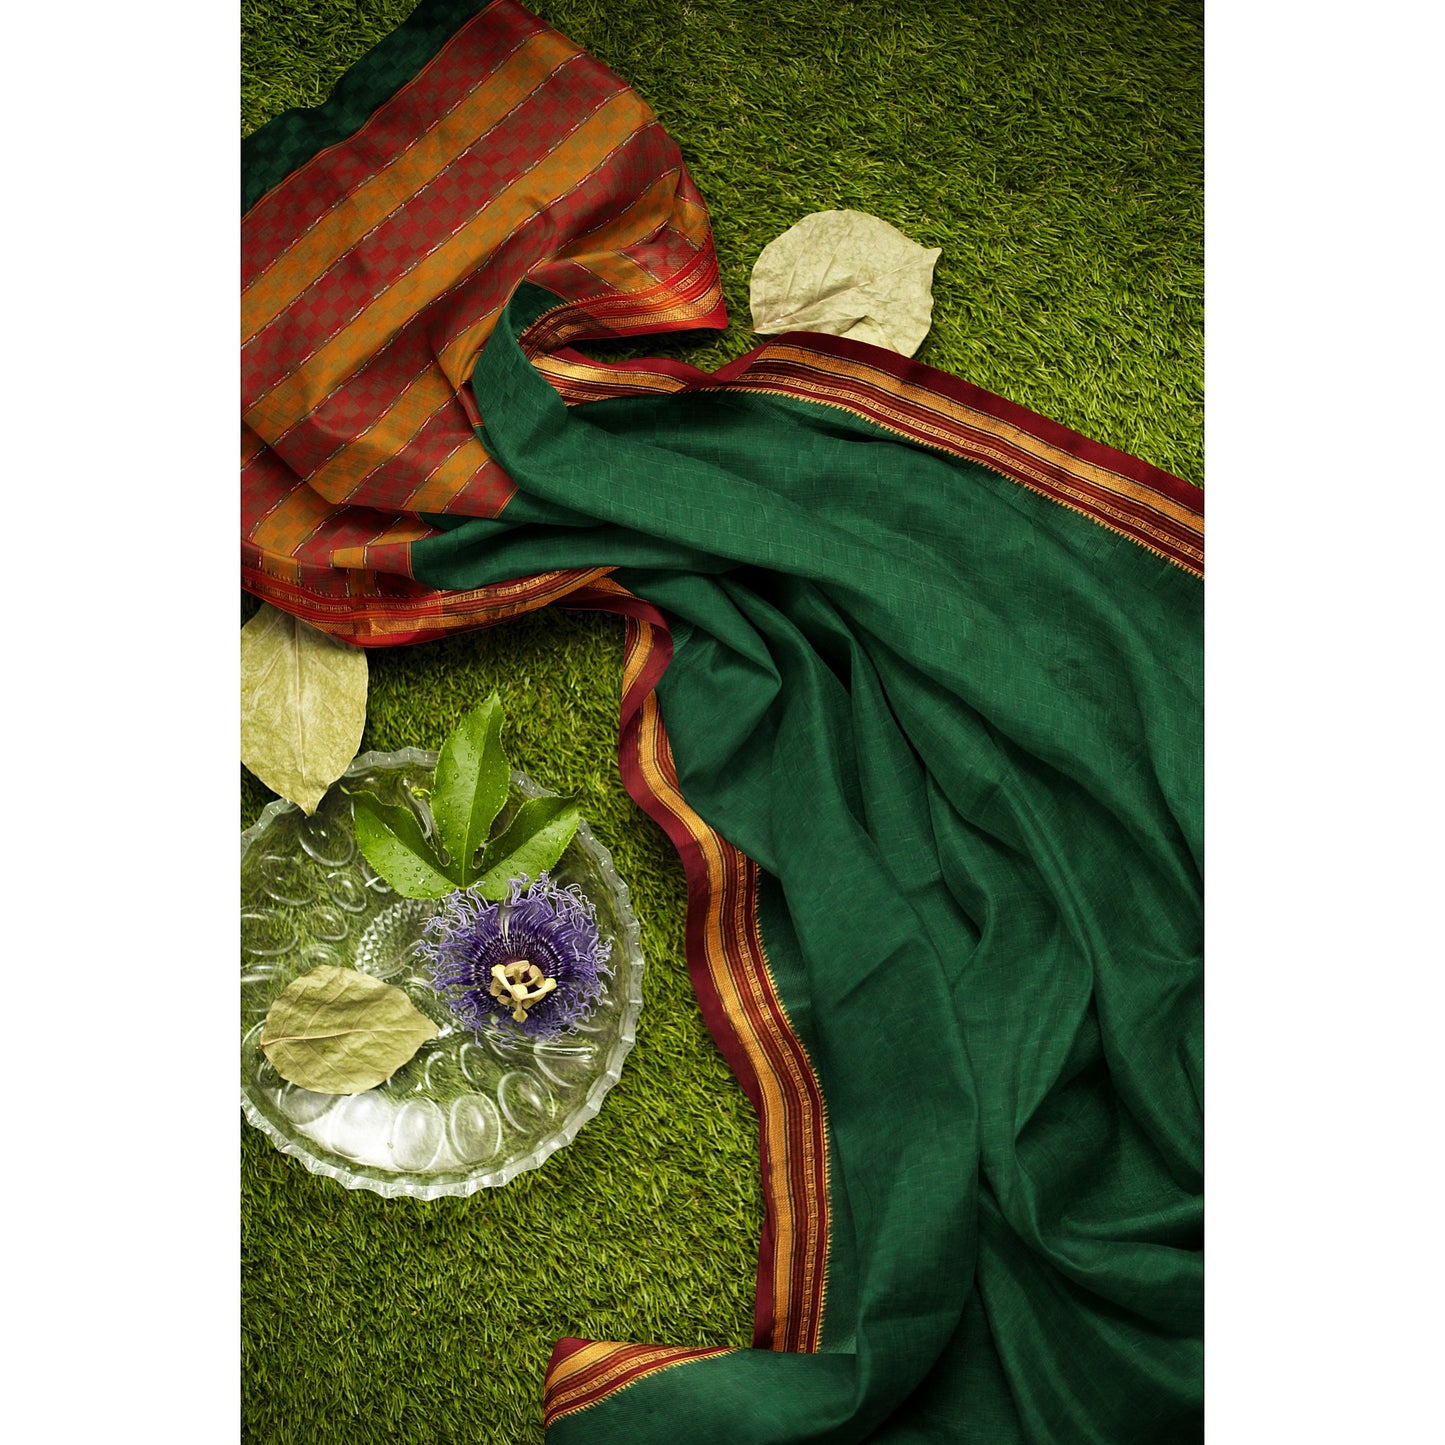 Ambuja Soft Mercerized Cotton saree - Dark Green with Maroon border